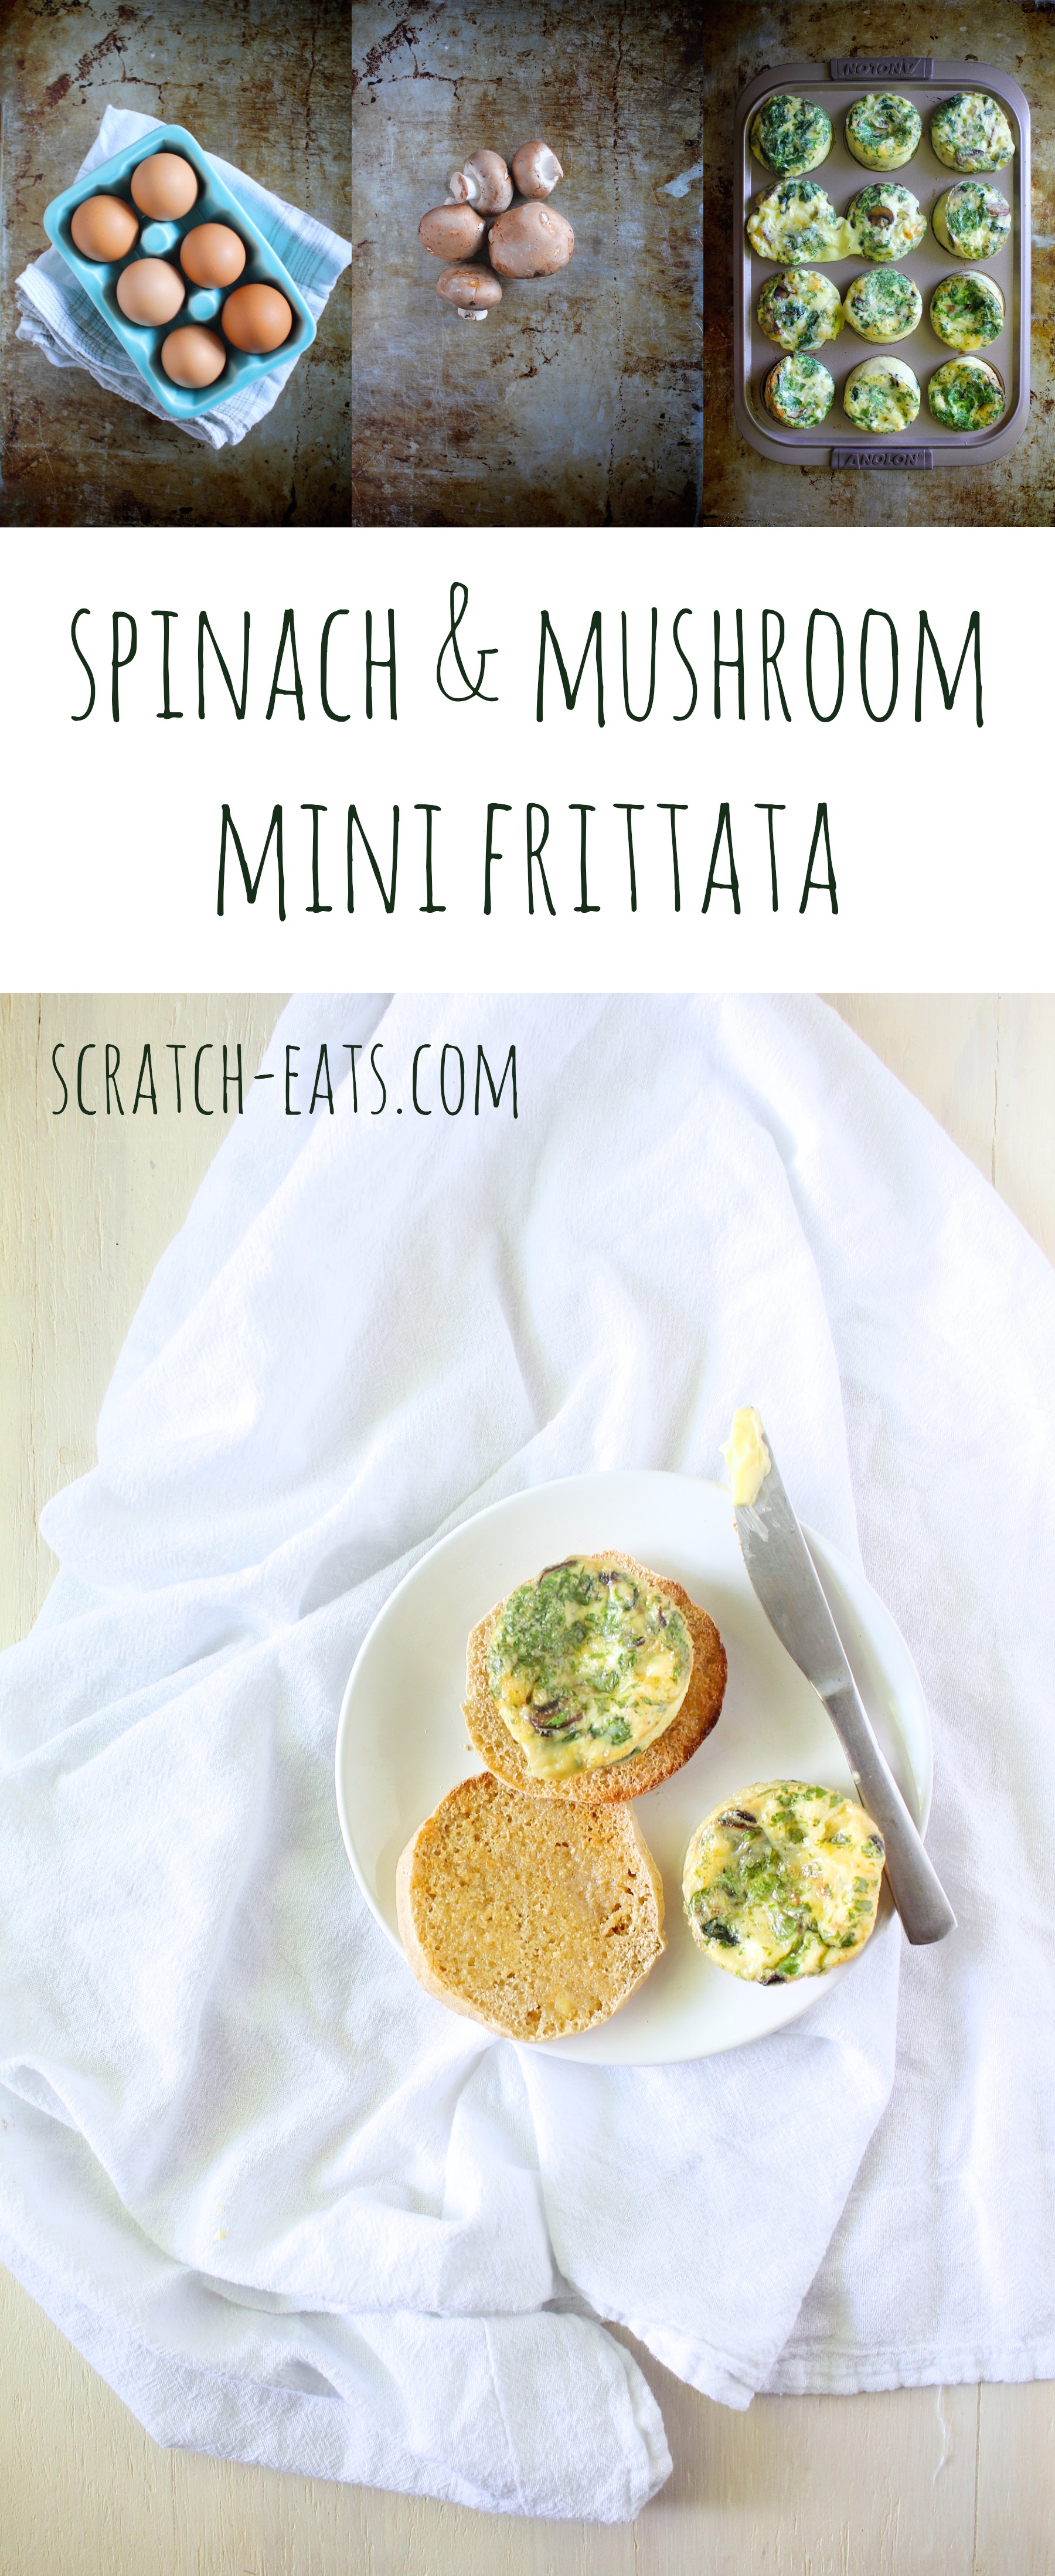 Spinach & Mushroom Mini Frittata